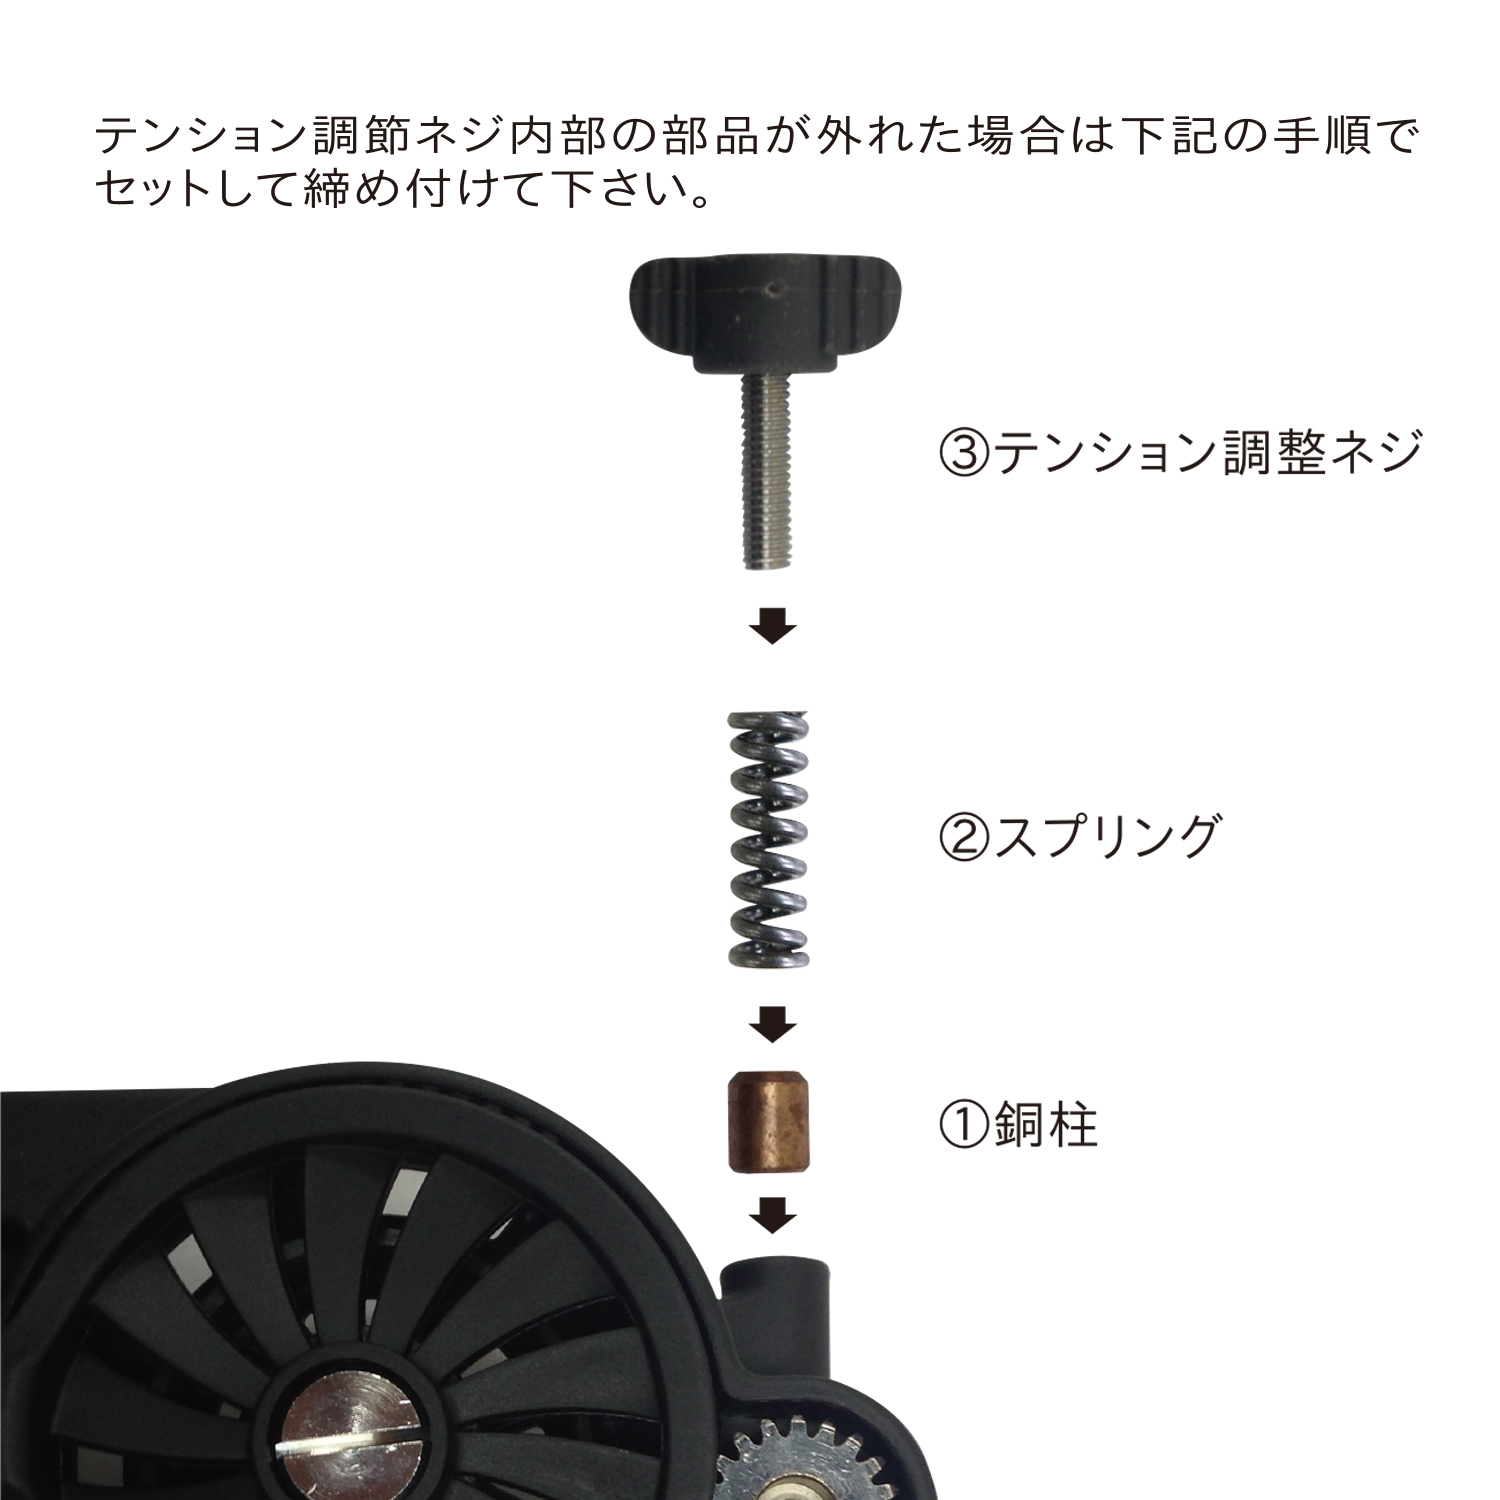 Dai-ichi Seiko High Speed Recycler 2.0 